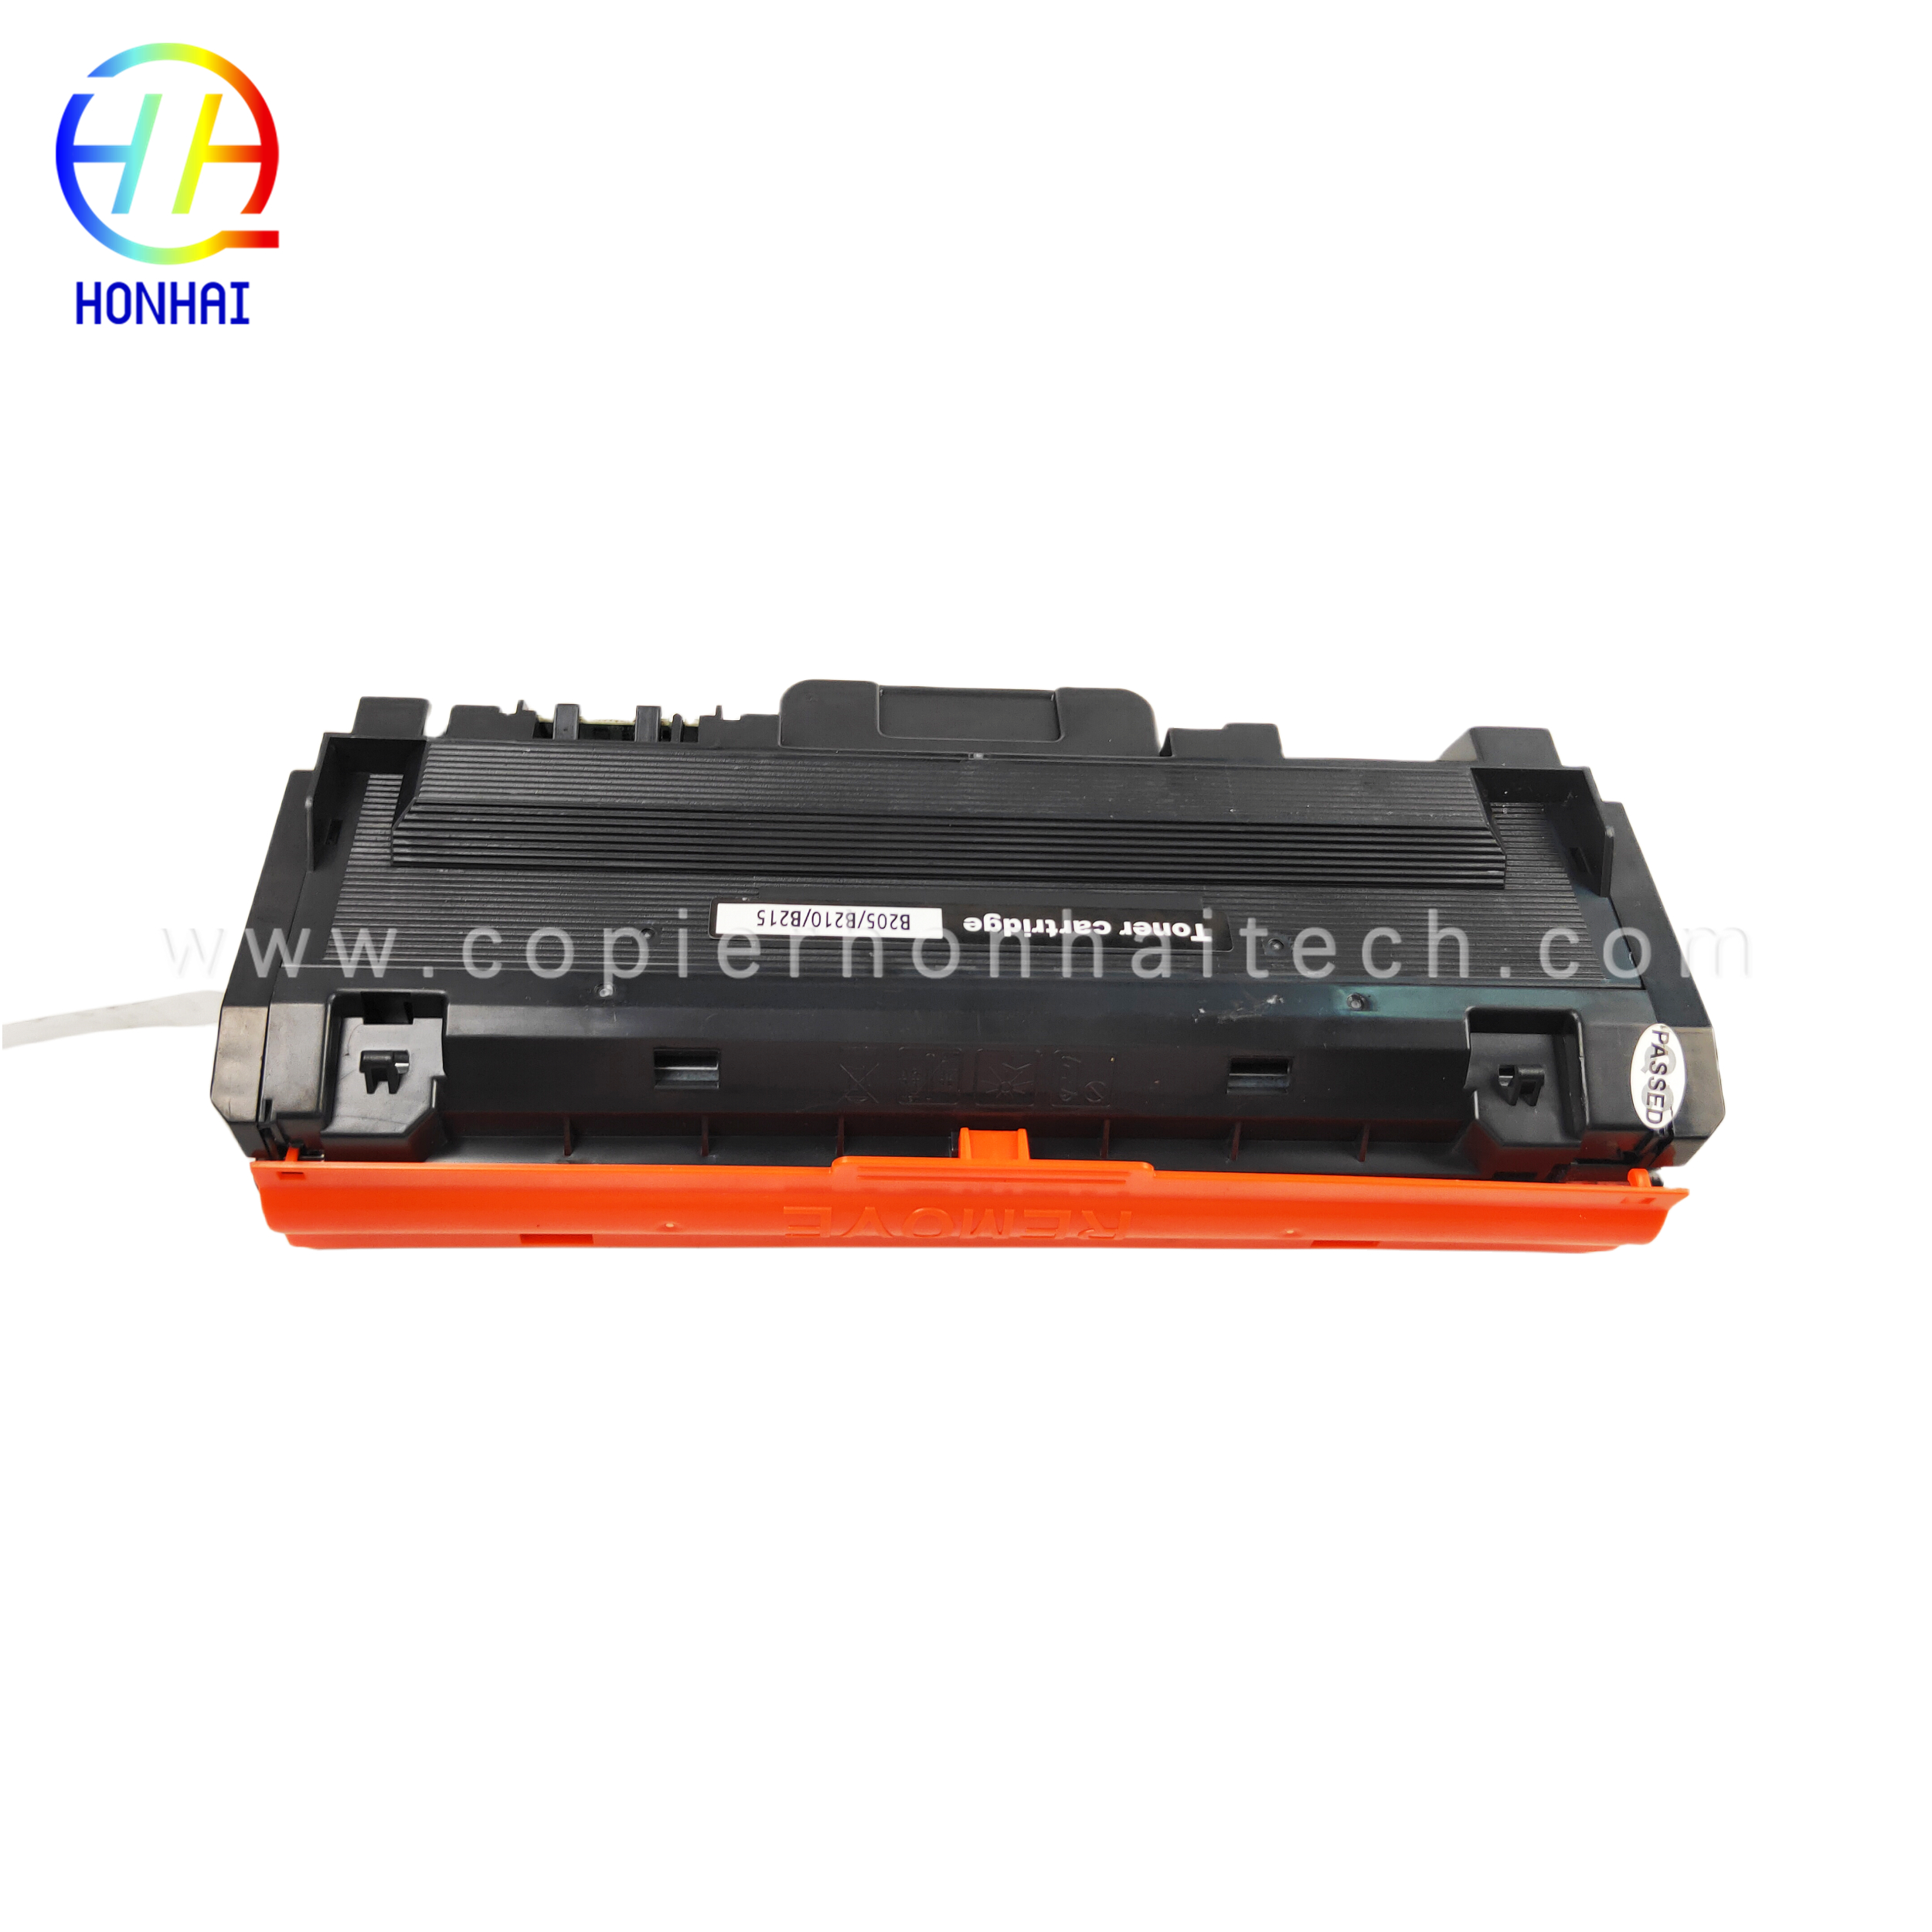 https://www.copierhonhaitech.com/black-toner-cartridge-for-xerox-b205-b210-b215-106r04348-product/